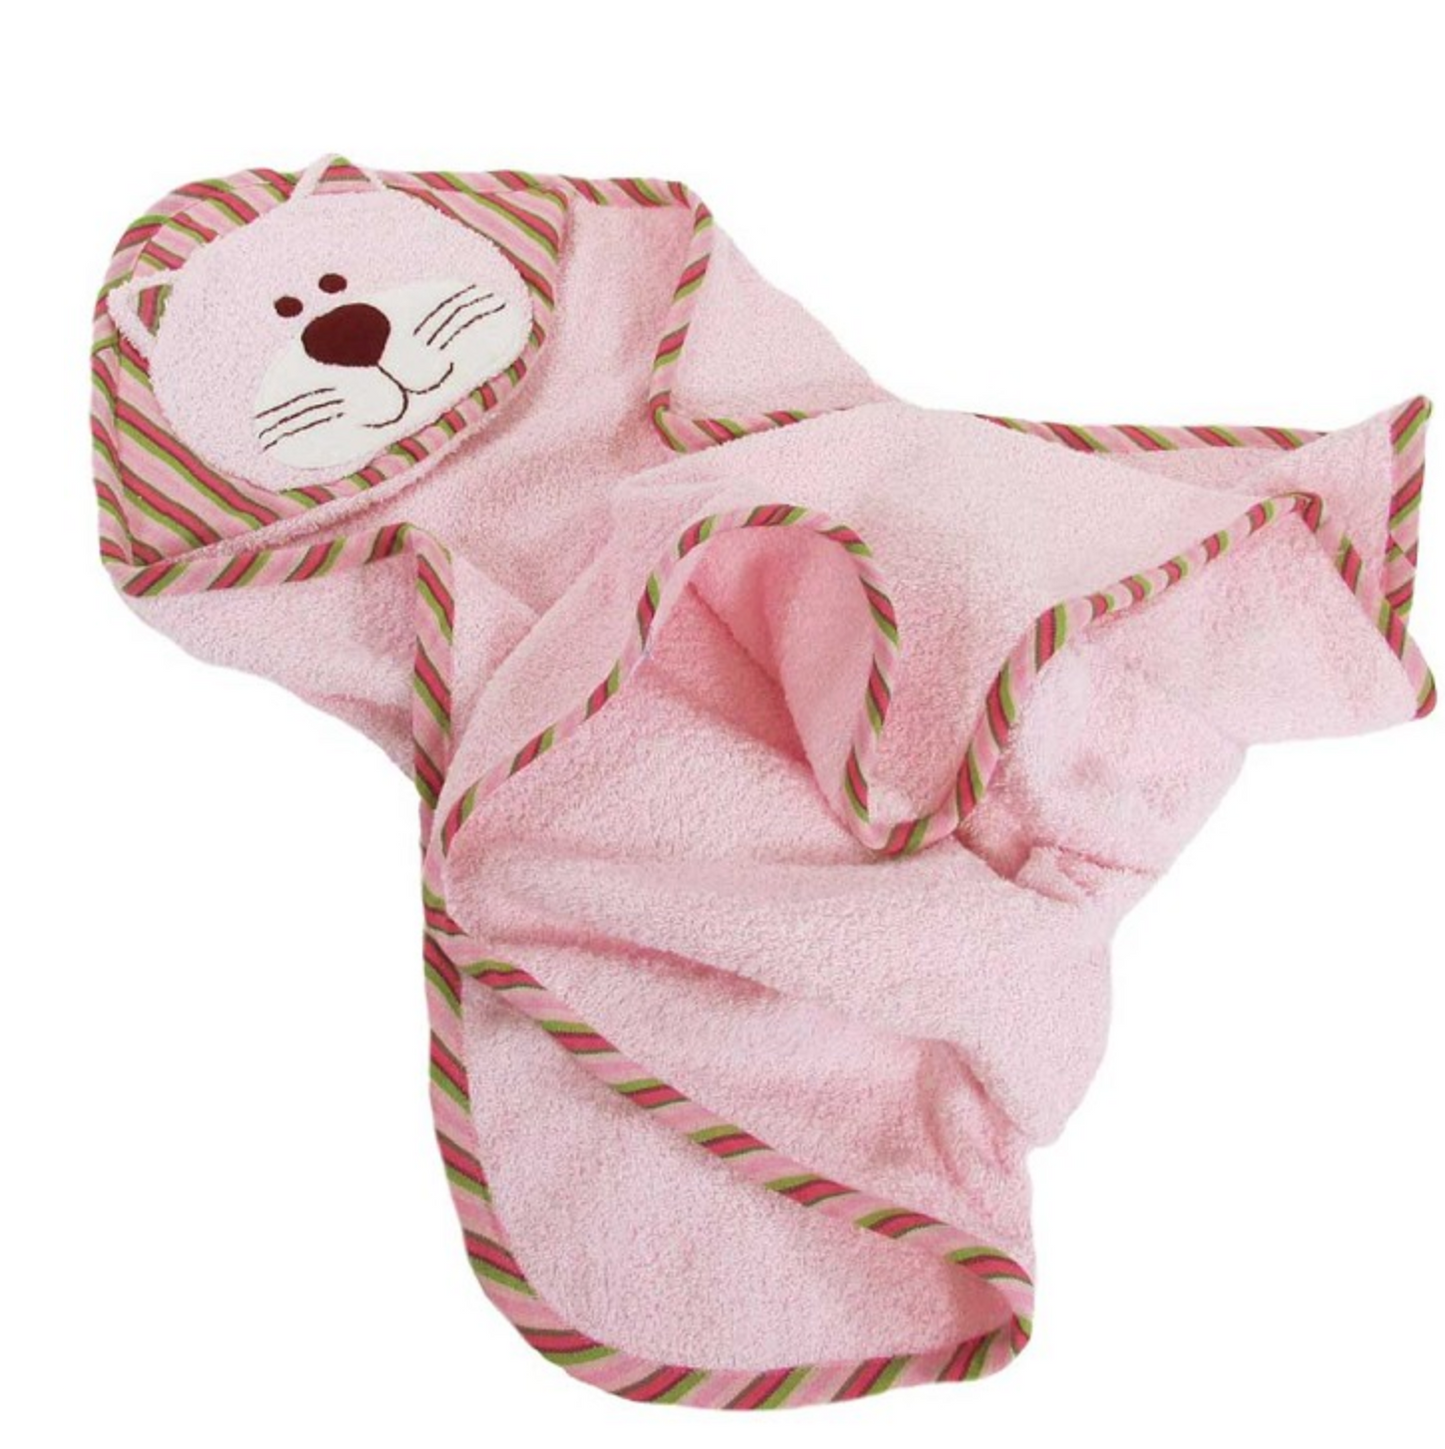 Bath Time Snuggle Towel - CJ Gift Shoppe